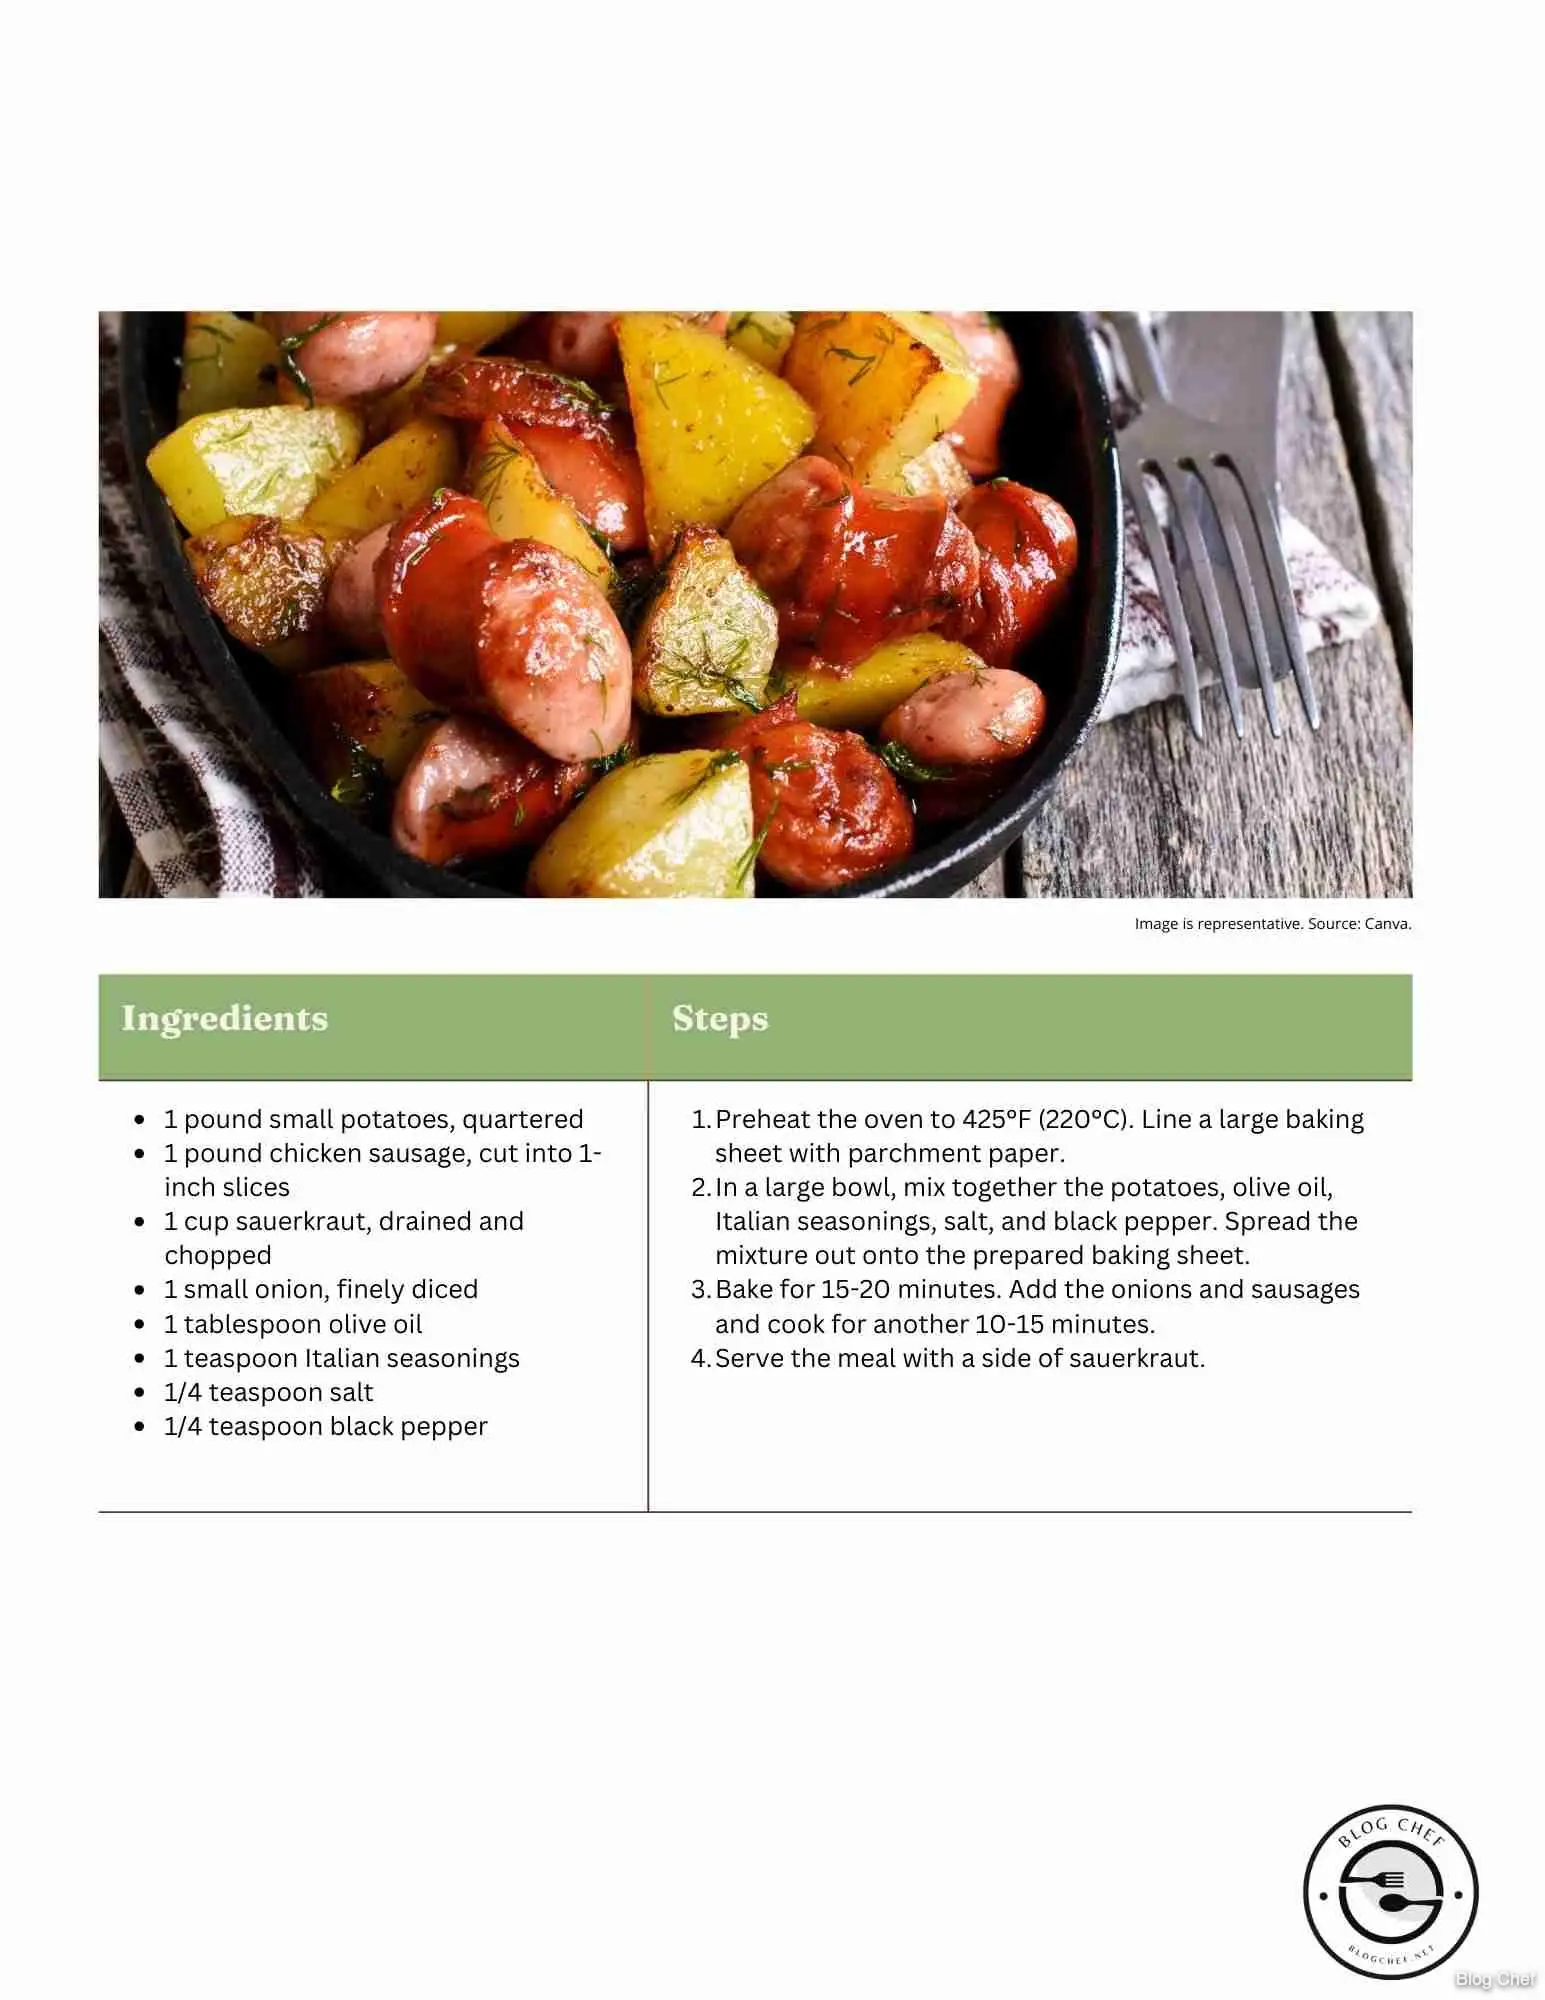 Recipe card for chicken sausage, potatoes, and sauerkraut.